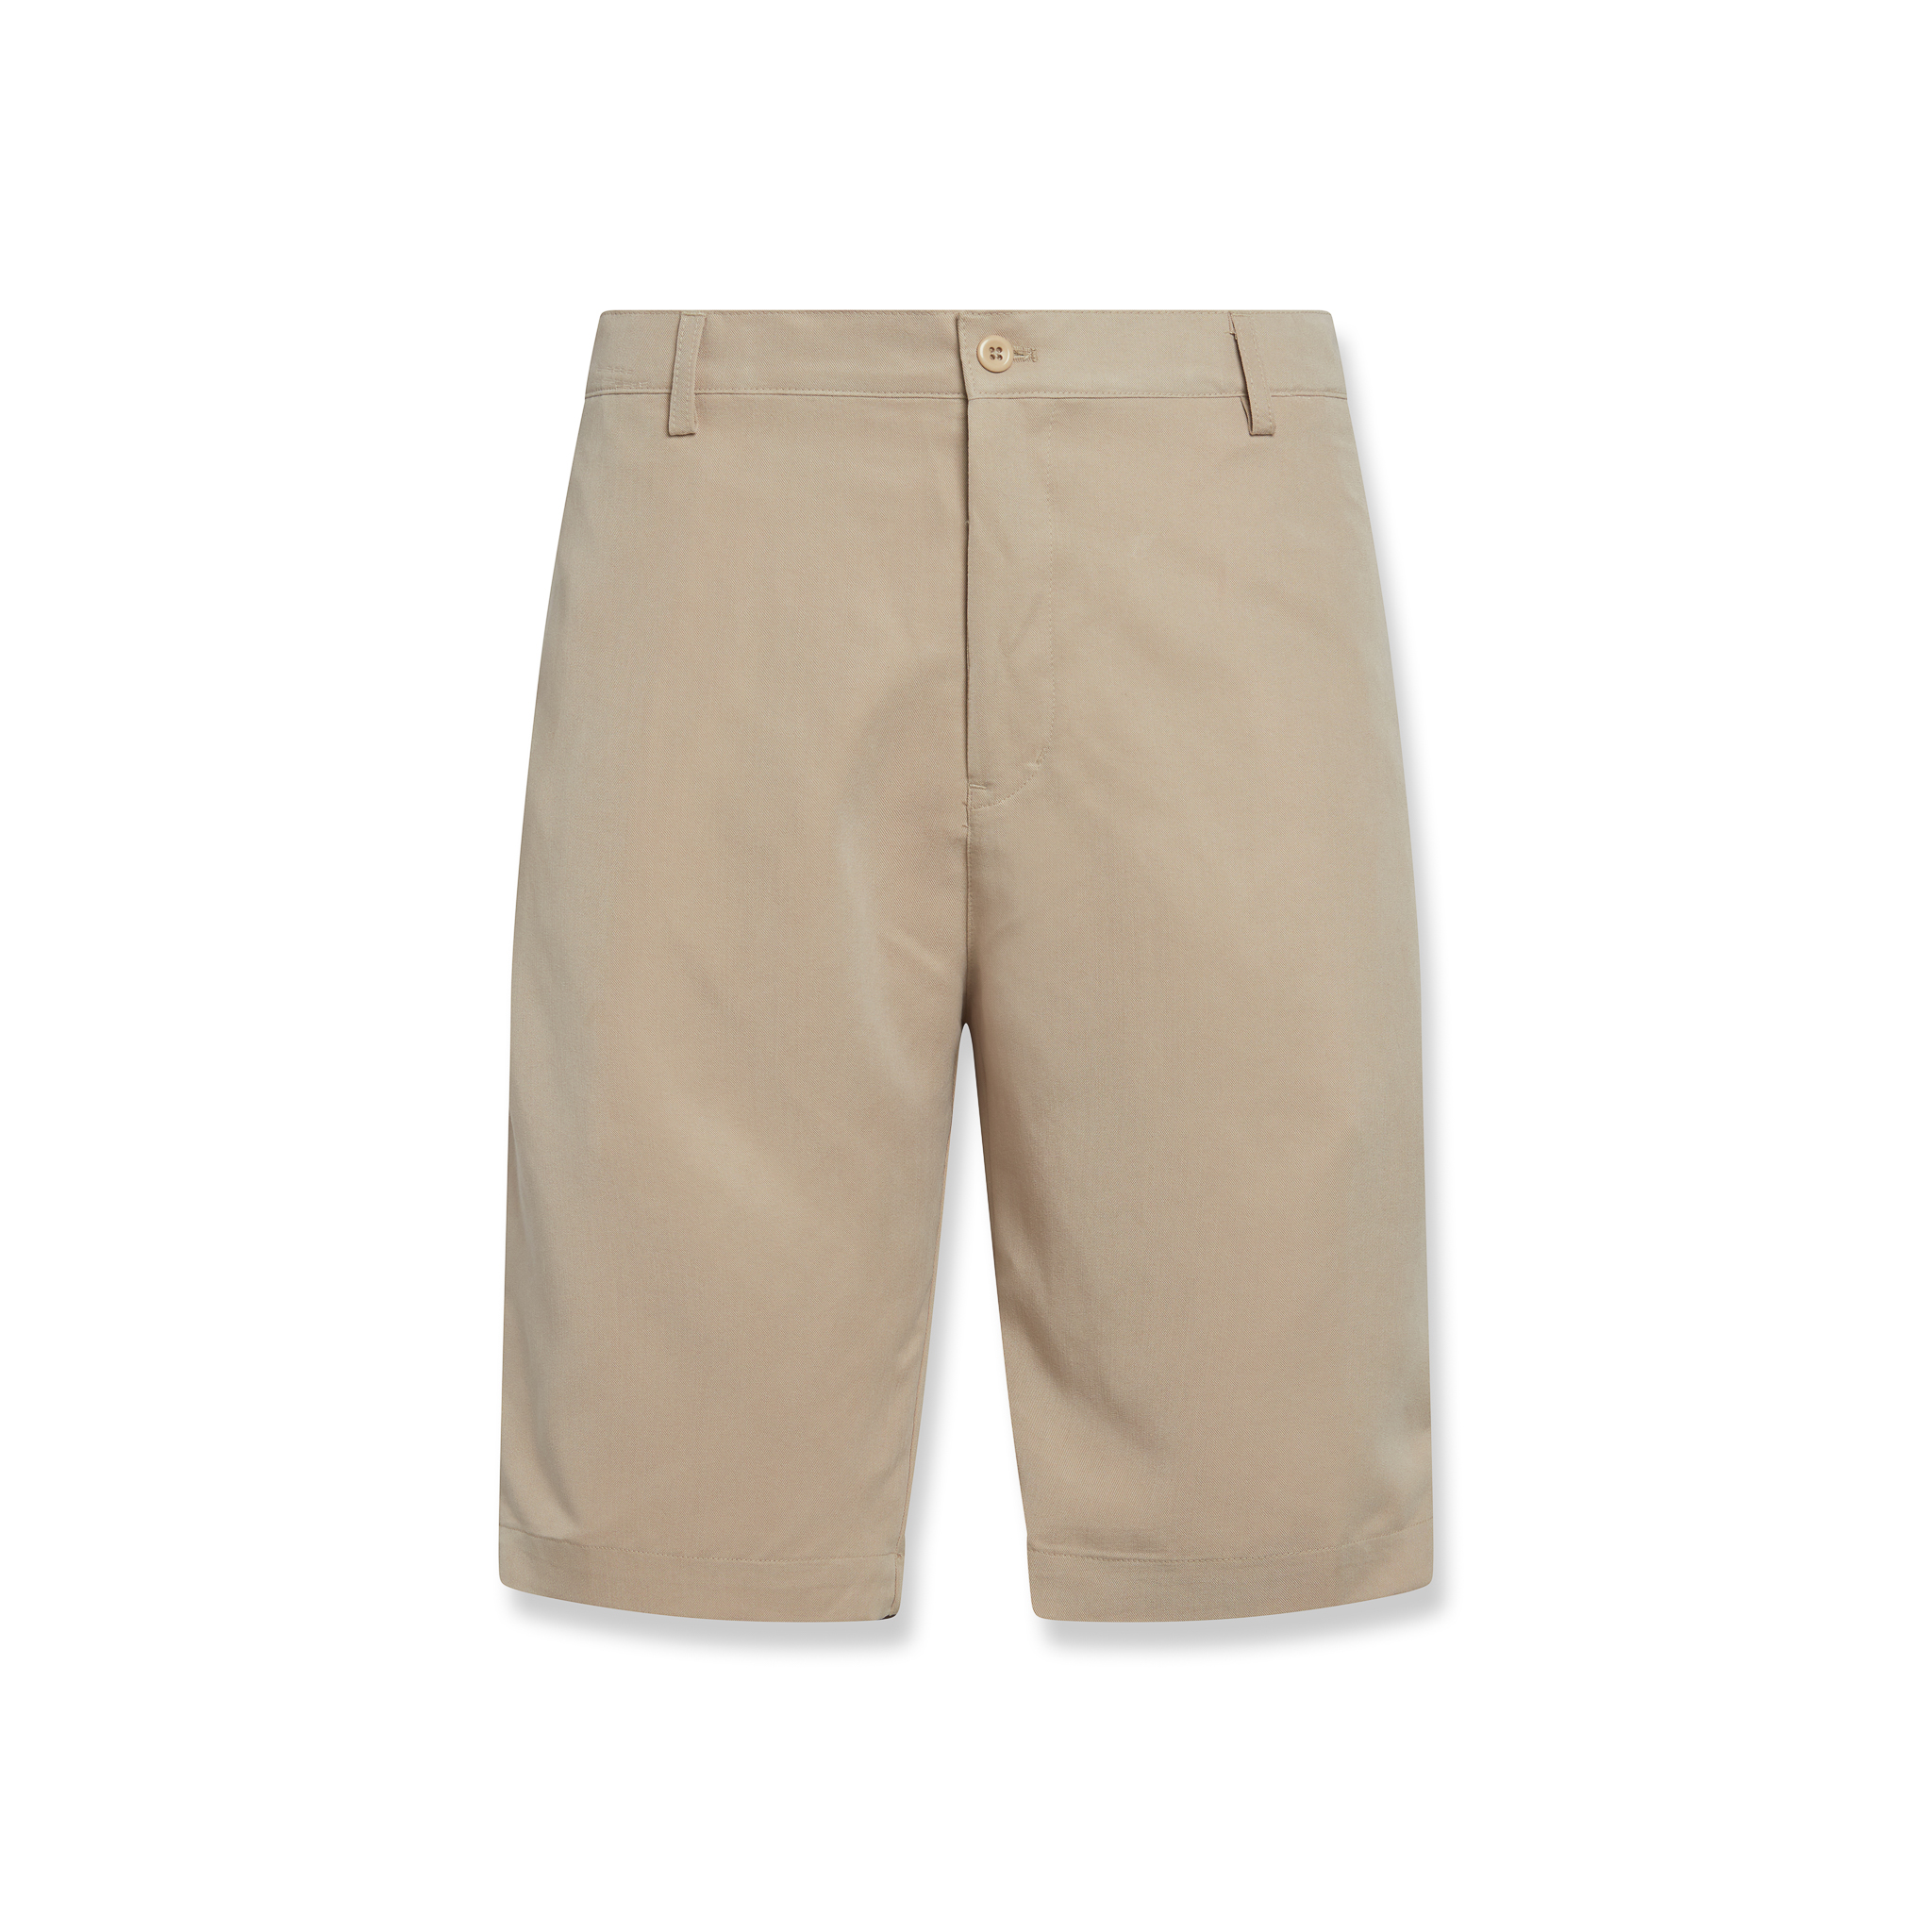 bamboo cay mens shorts island style casual shorts